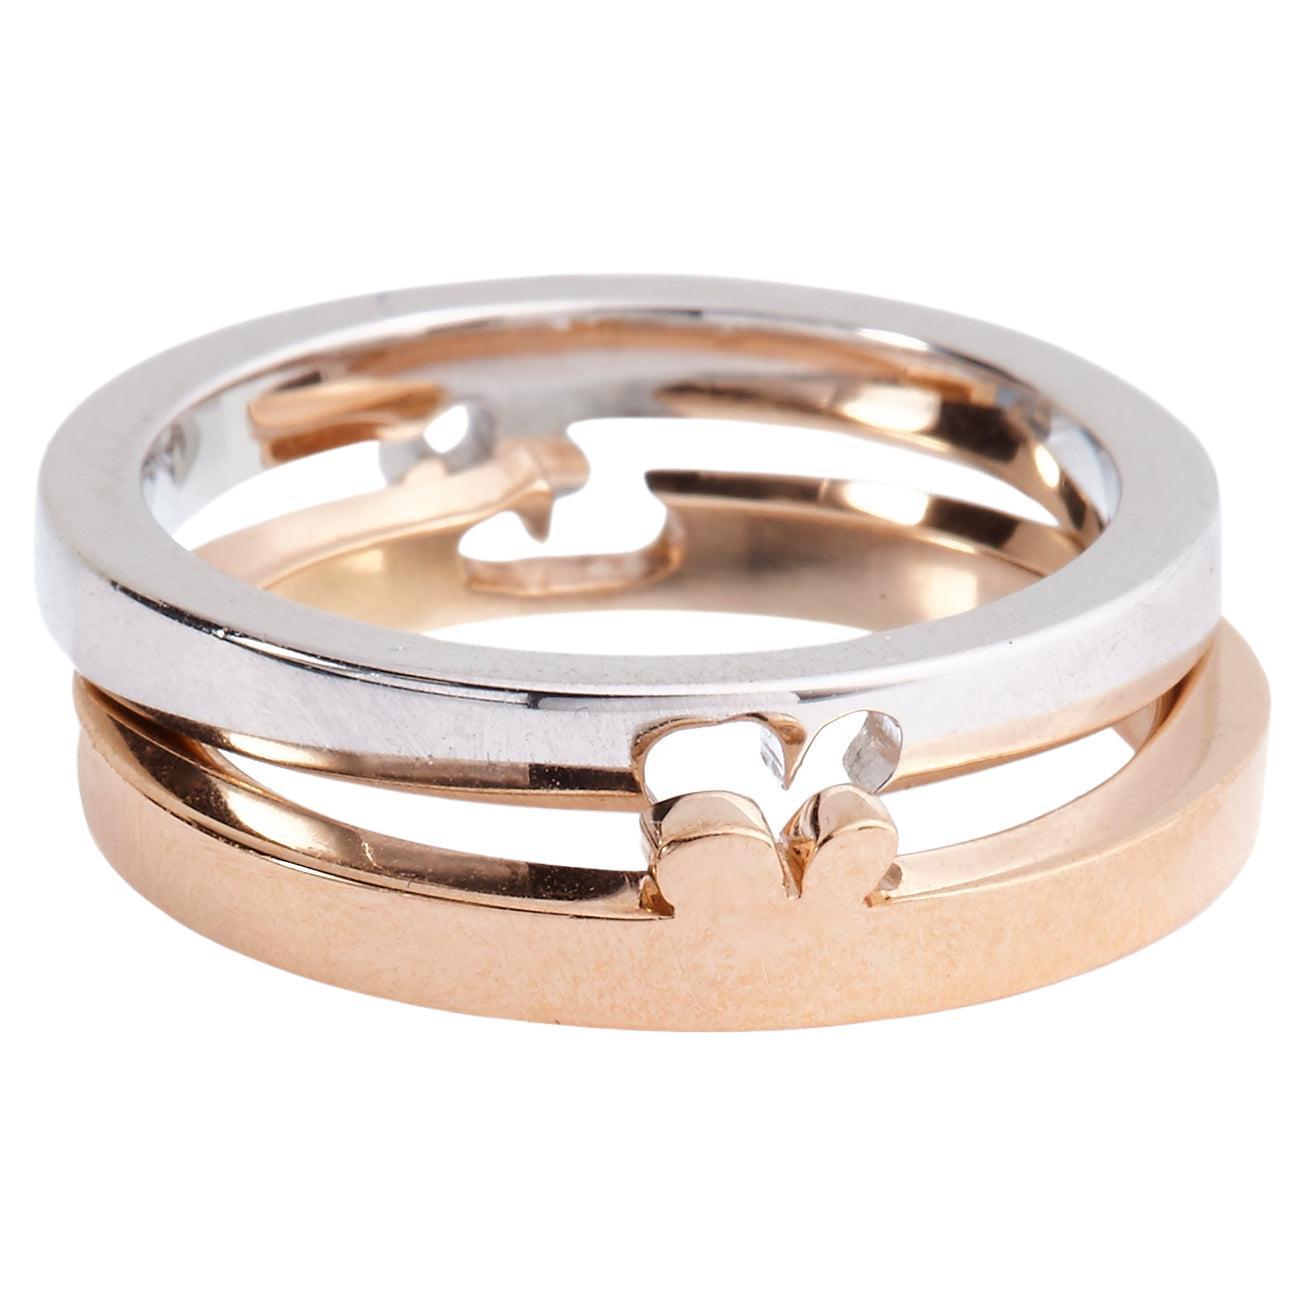 Bespoke 18k Gold Wedding Ring with Interlocking Initials Design For Sale